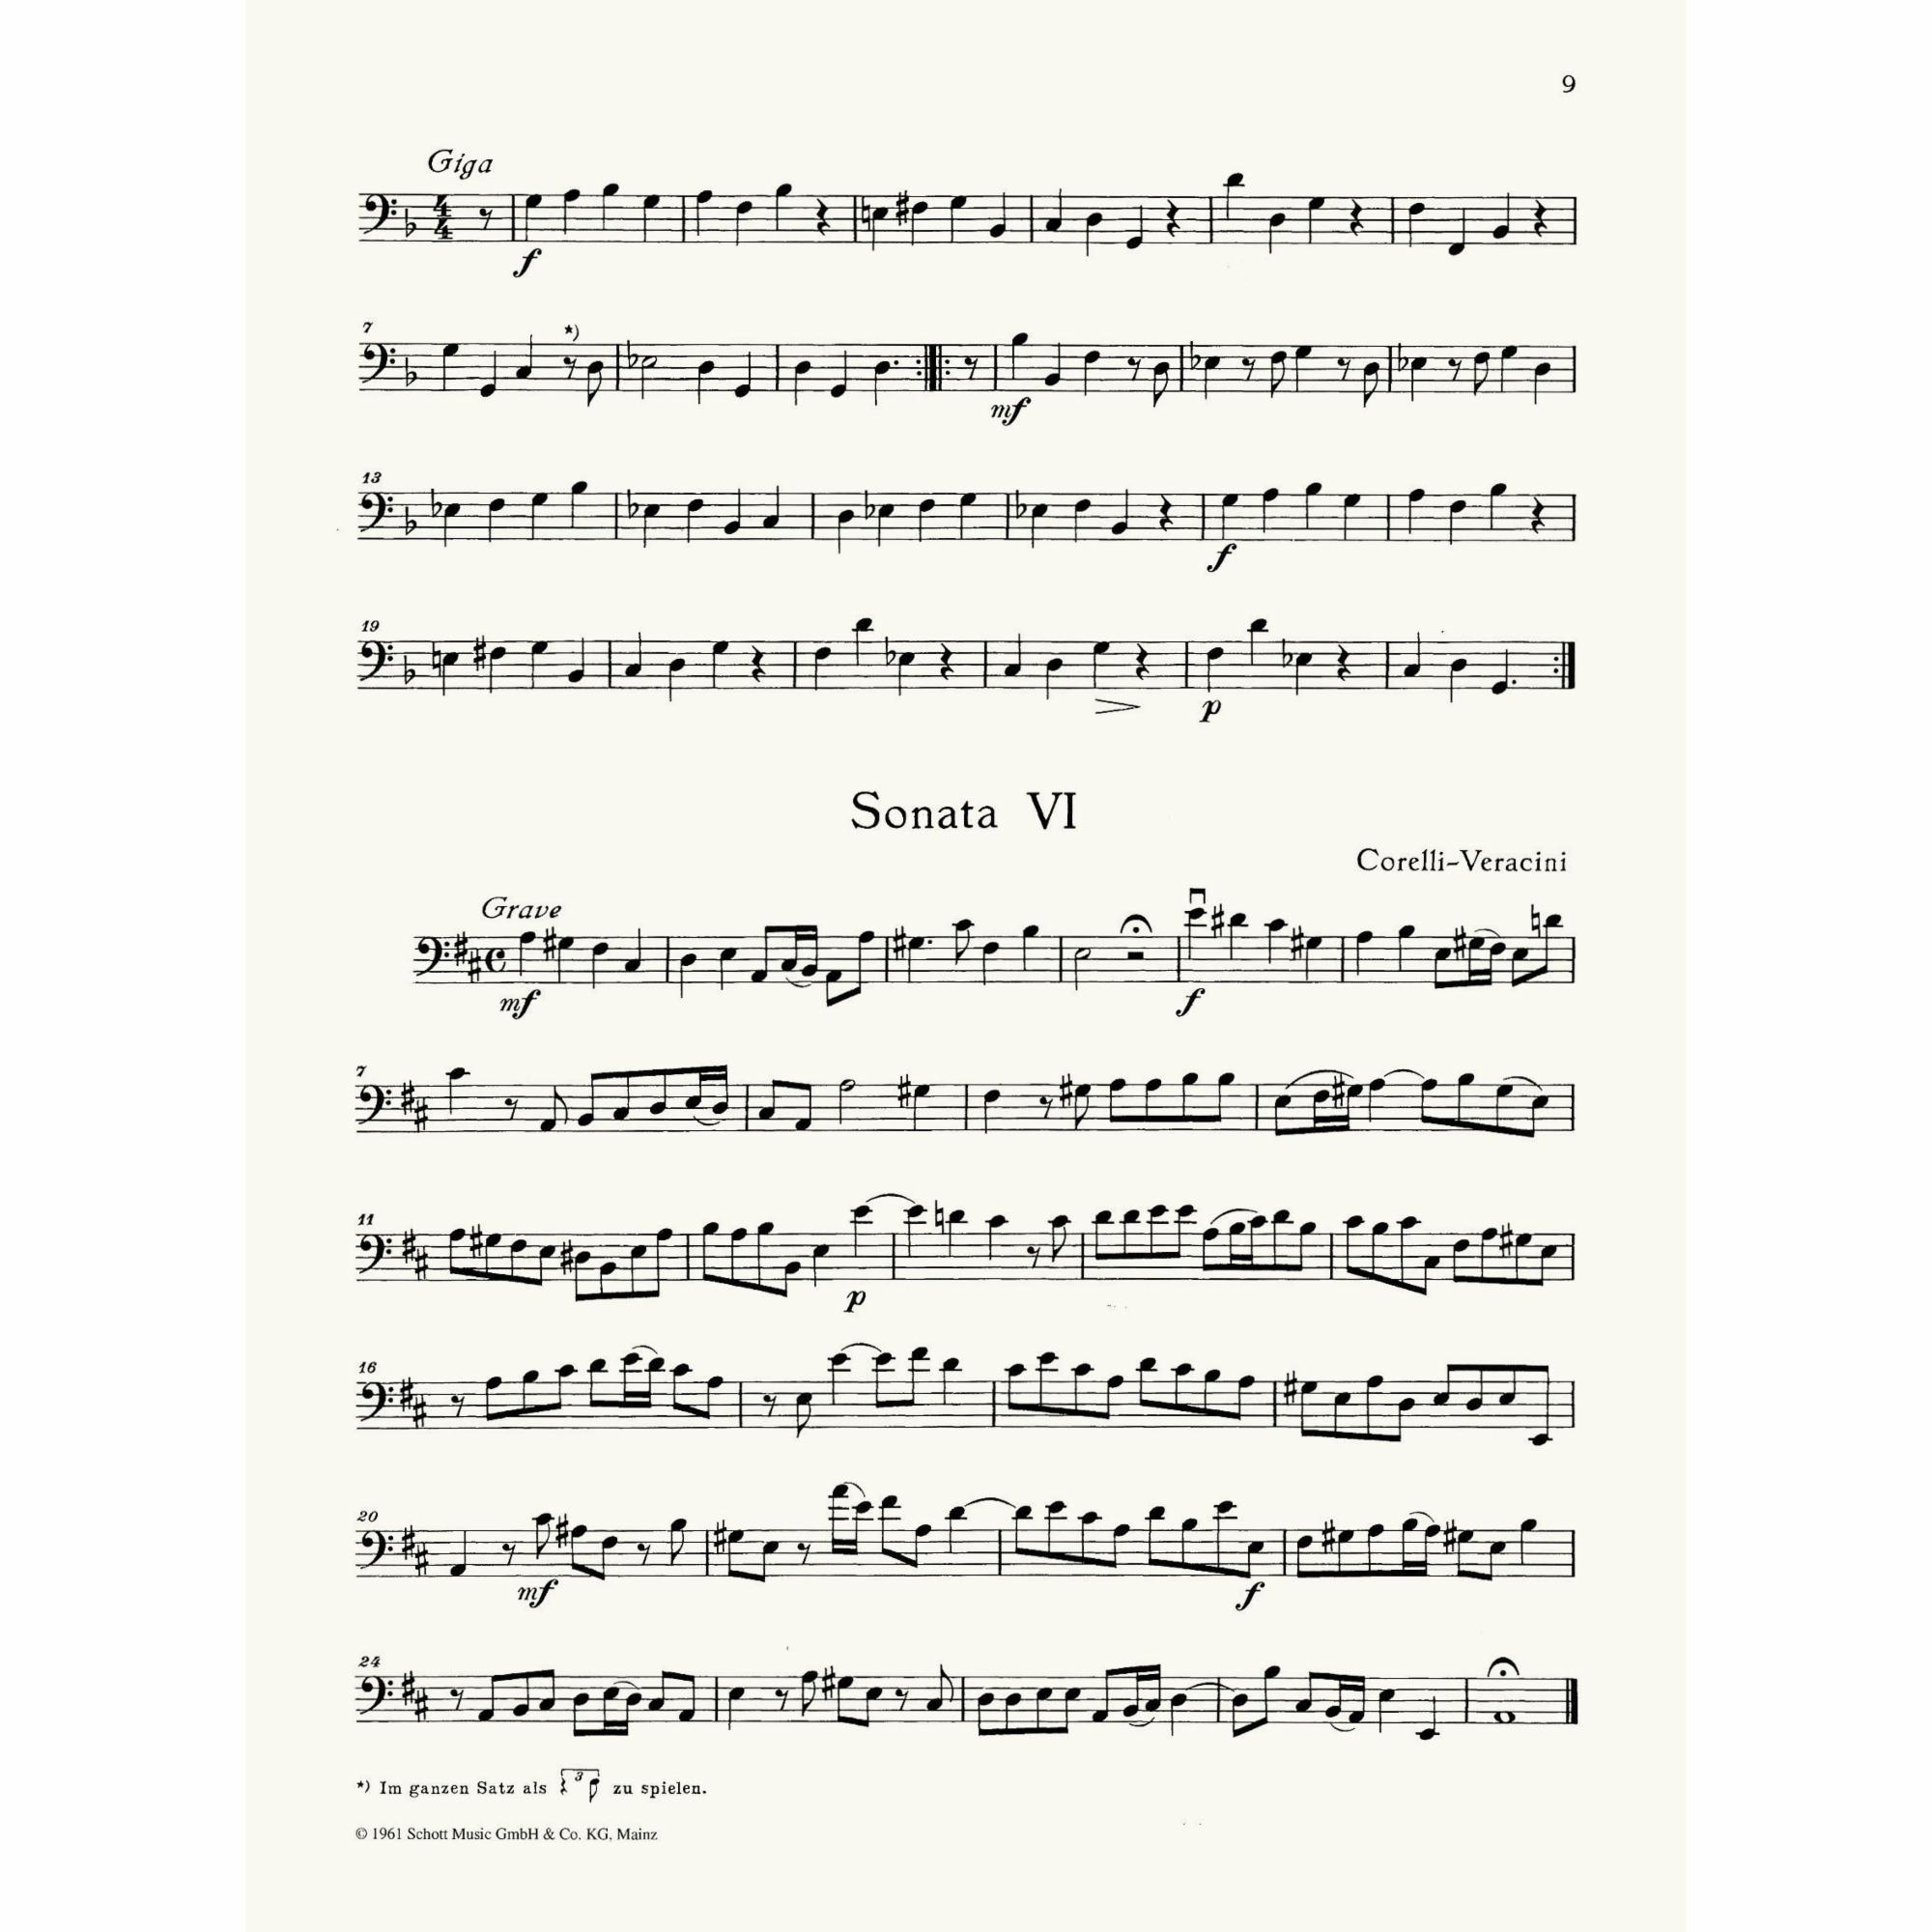 Sample: Vol. 2, Cello Part